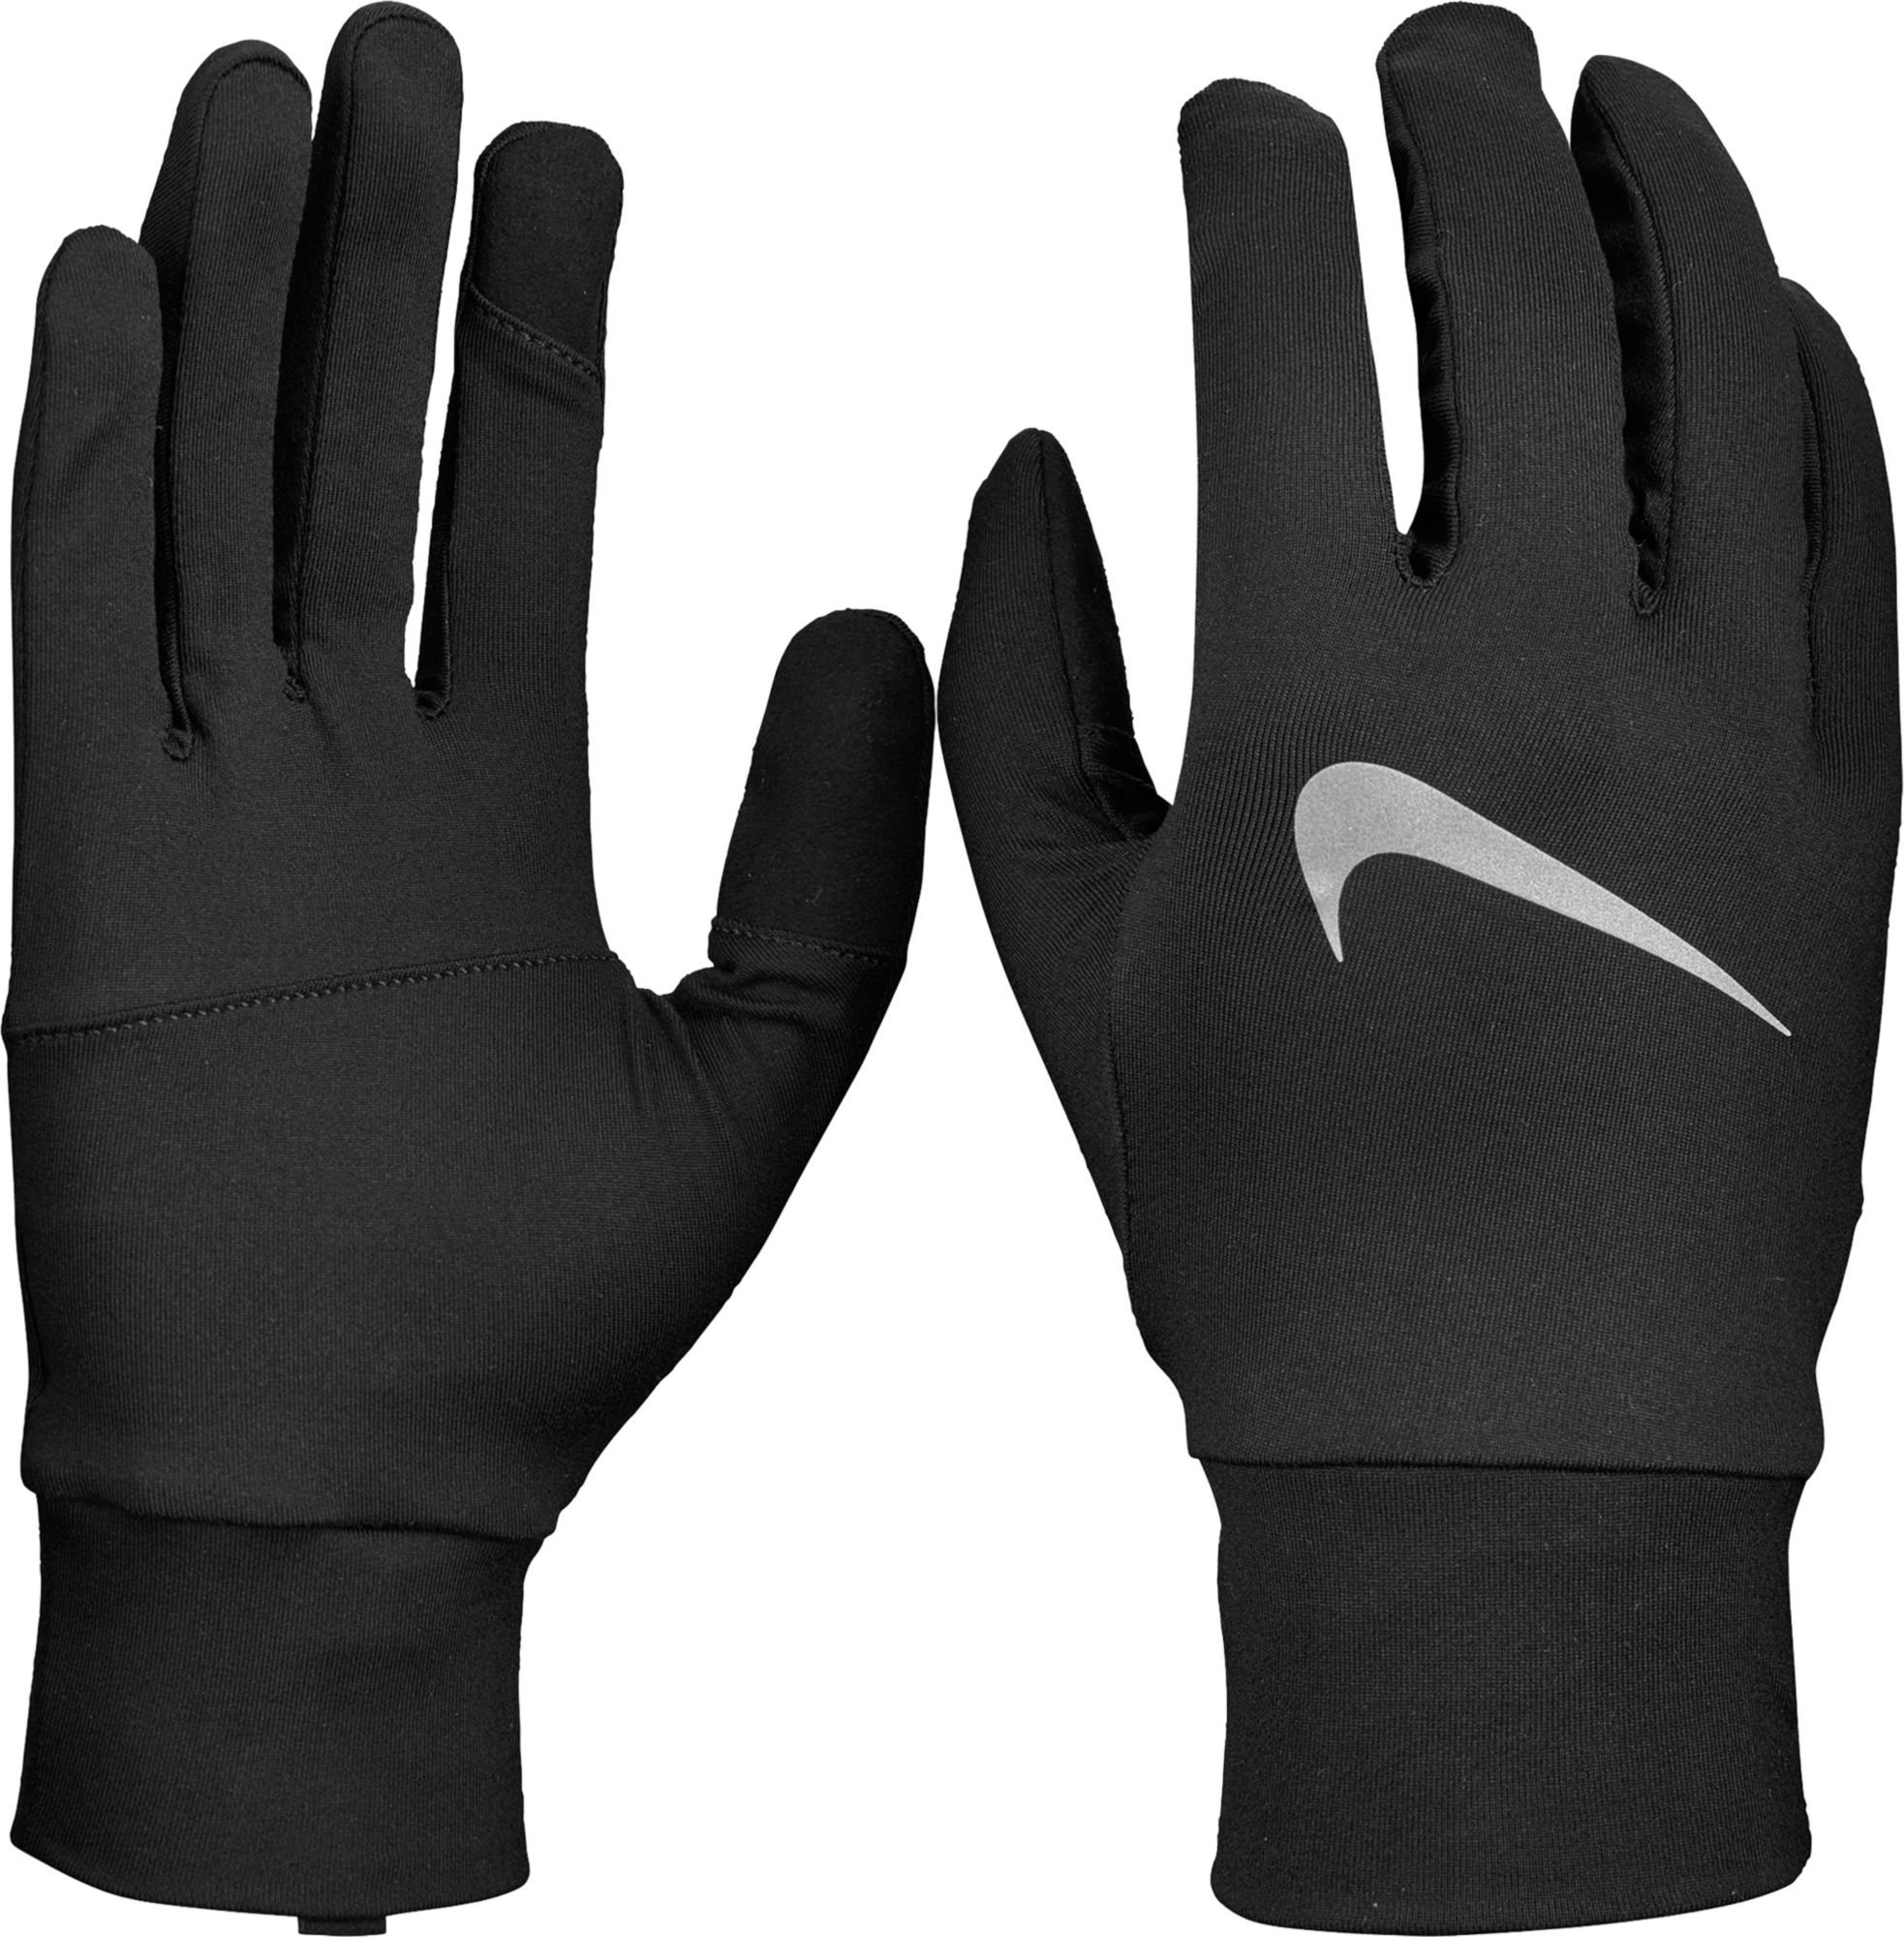 thin nike gloves